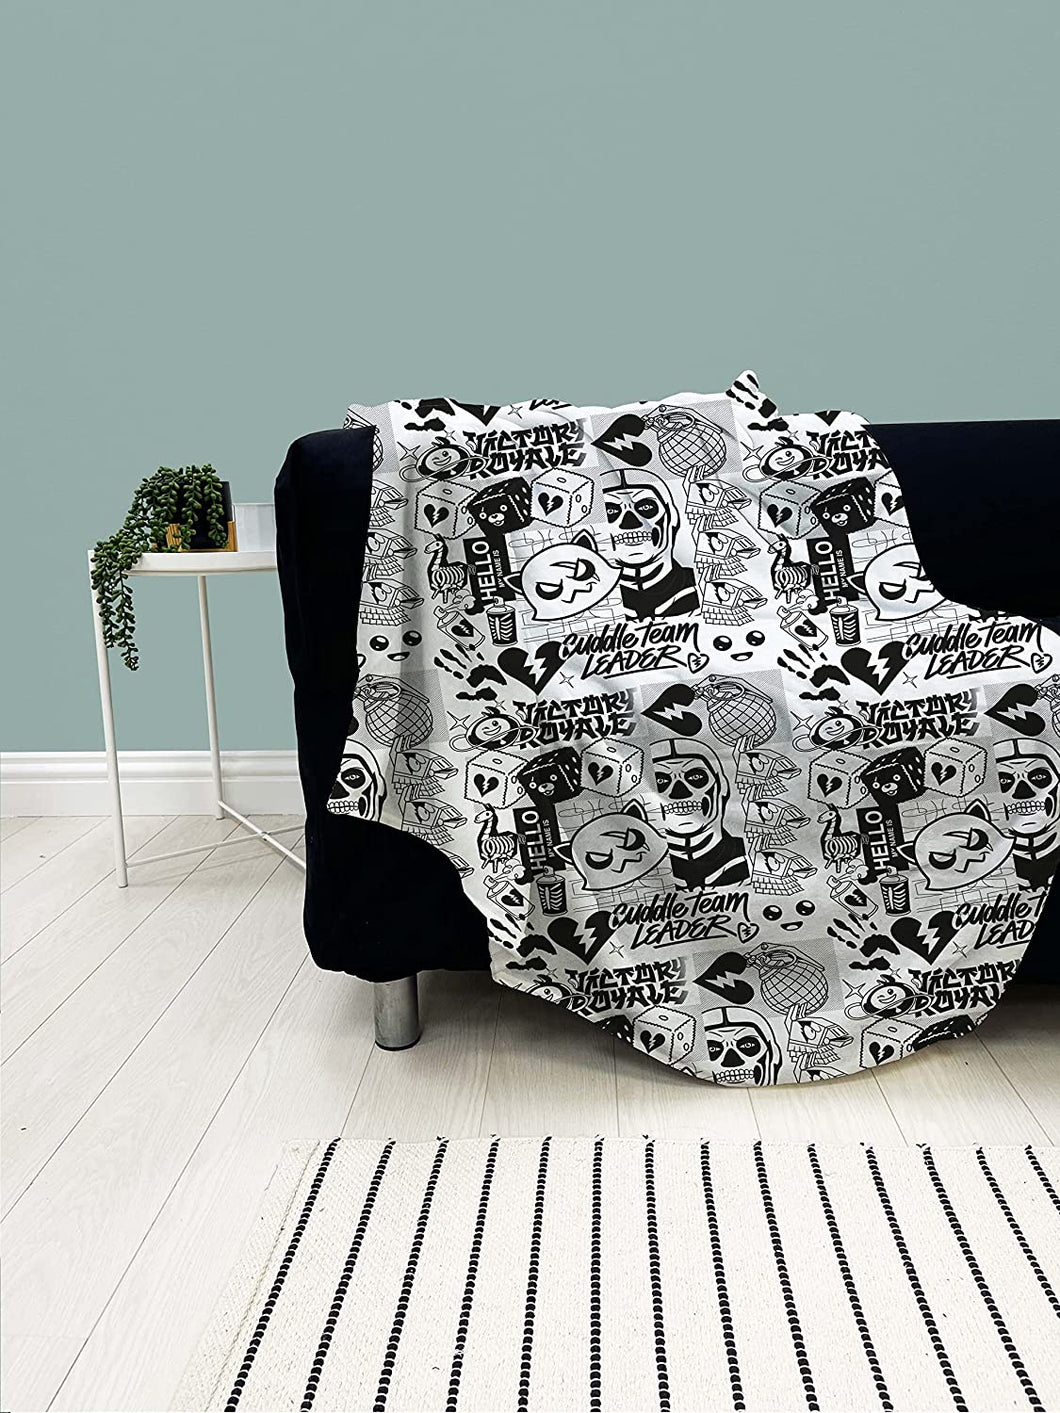 Fortnite Official Fanzine Fleece Blanket 100cm x 150cm Super Soft